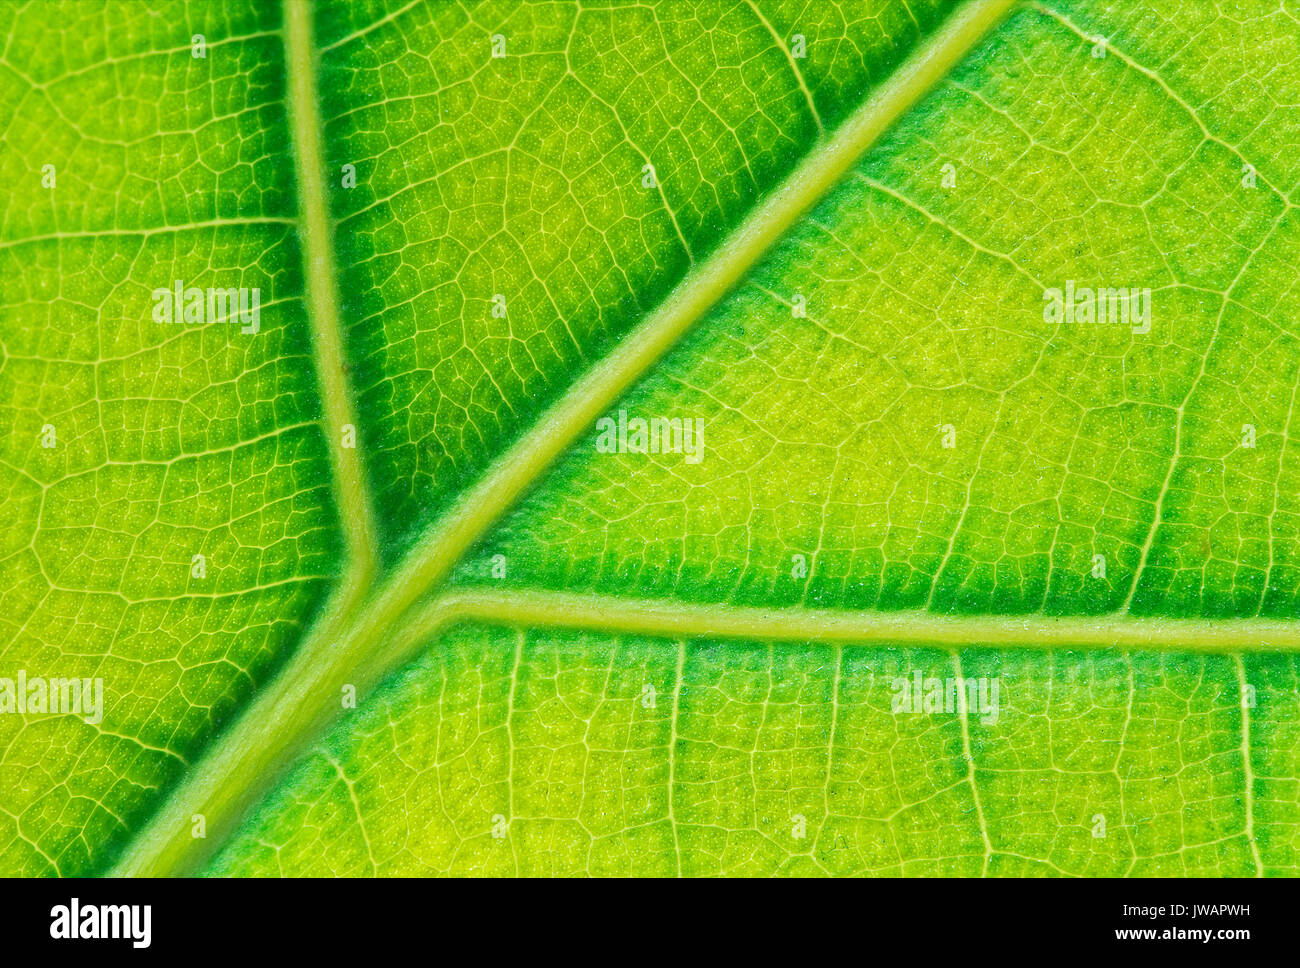 Netzartige Blattaderung des Blatts einer Plumeria-Art (Frangipani) Stock Photo